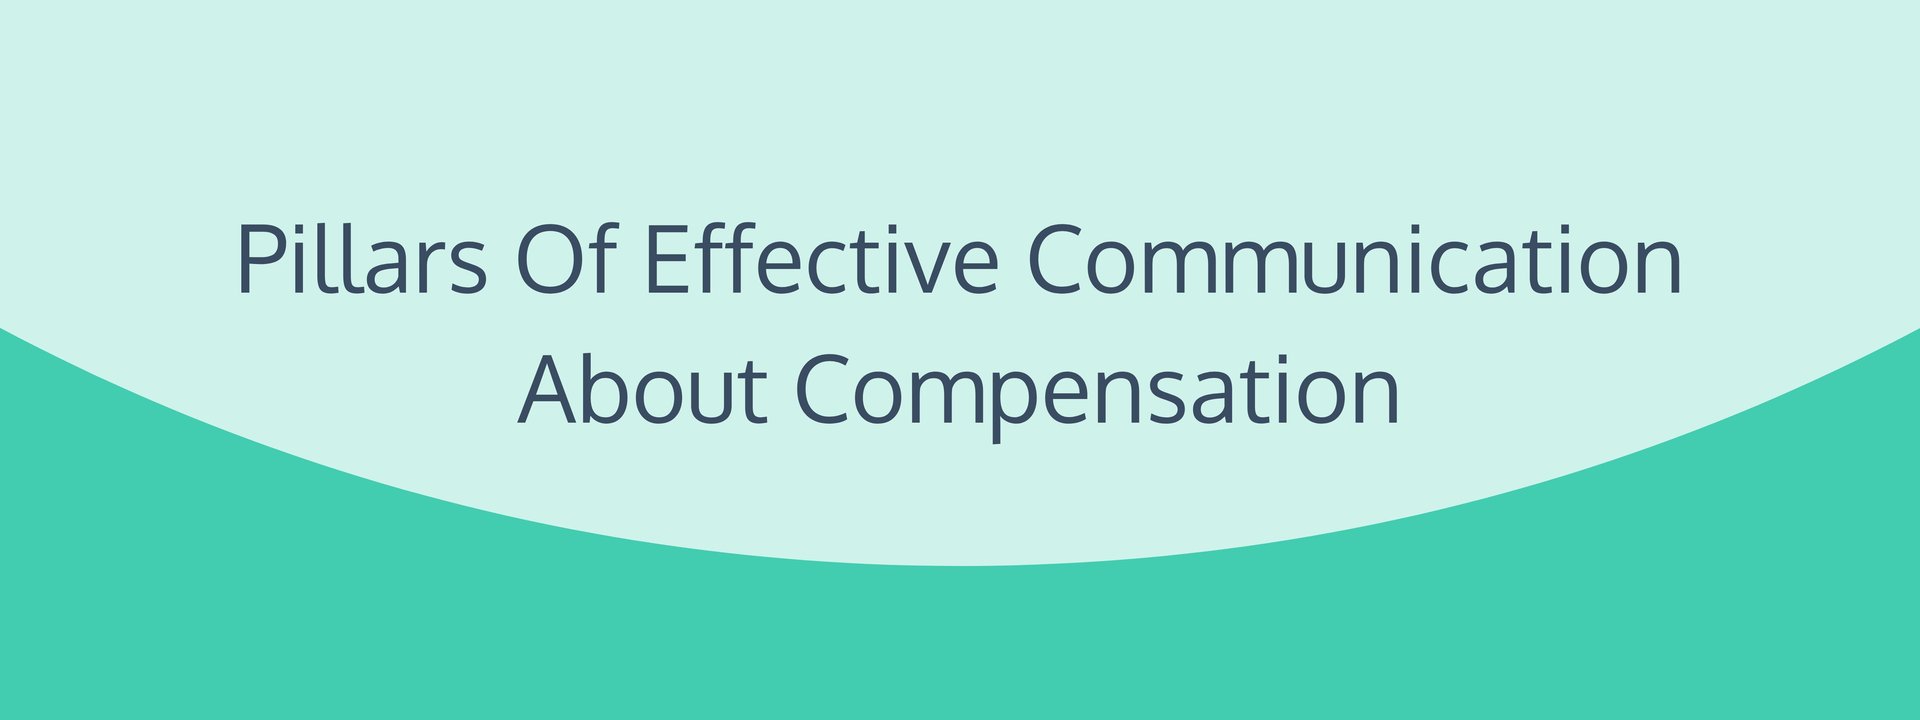 Pillars of Effective Communication Around Compensation